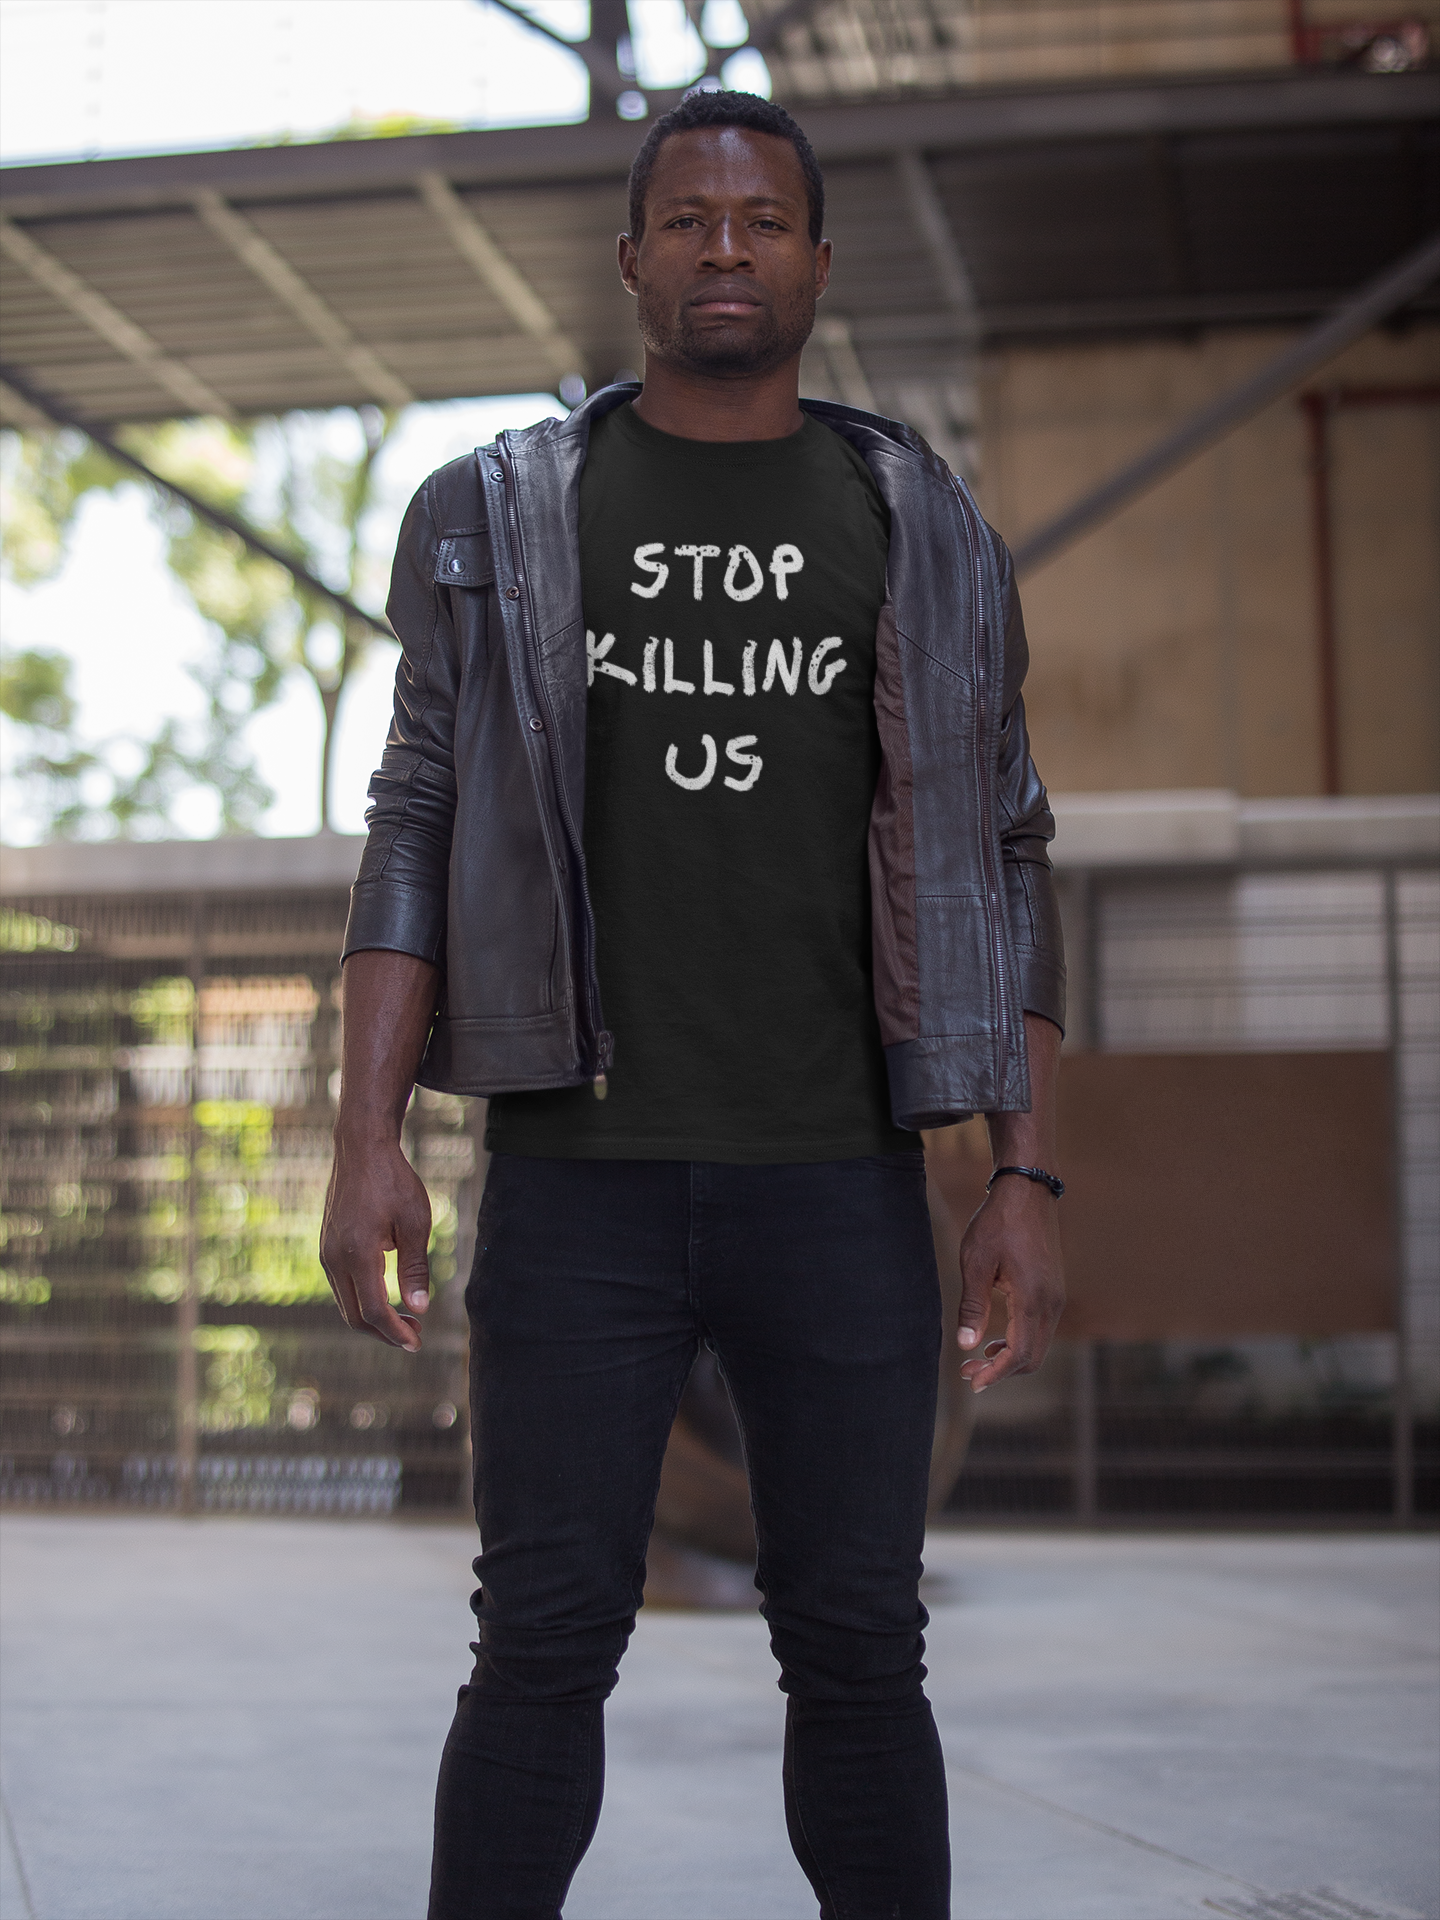 Stop Killing Us Black Lives Matter Shirt - Funny Labrador Cute Shirt Labradors Labs